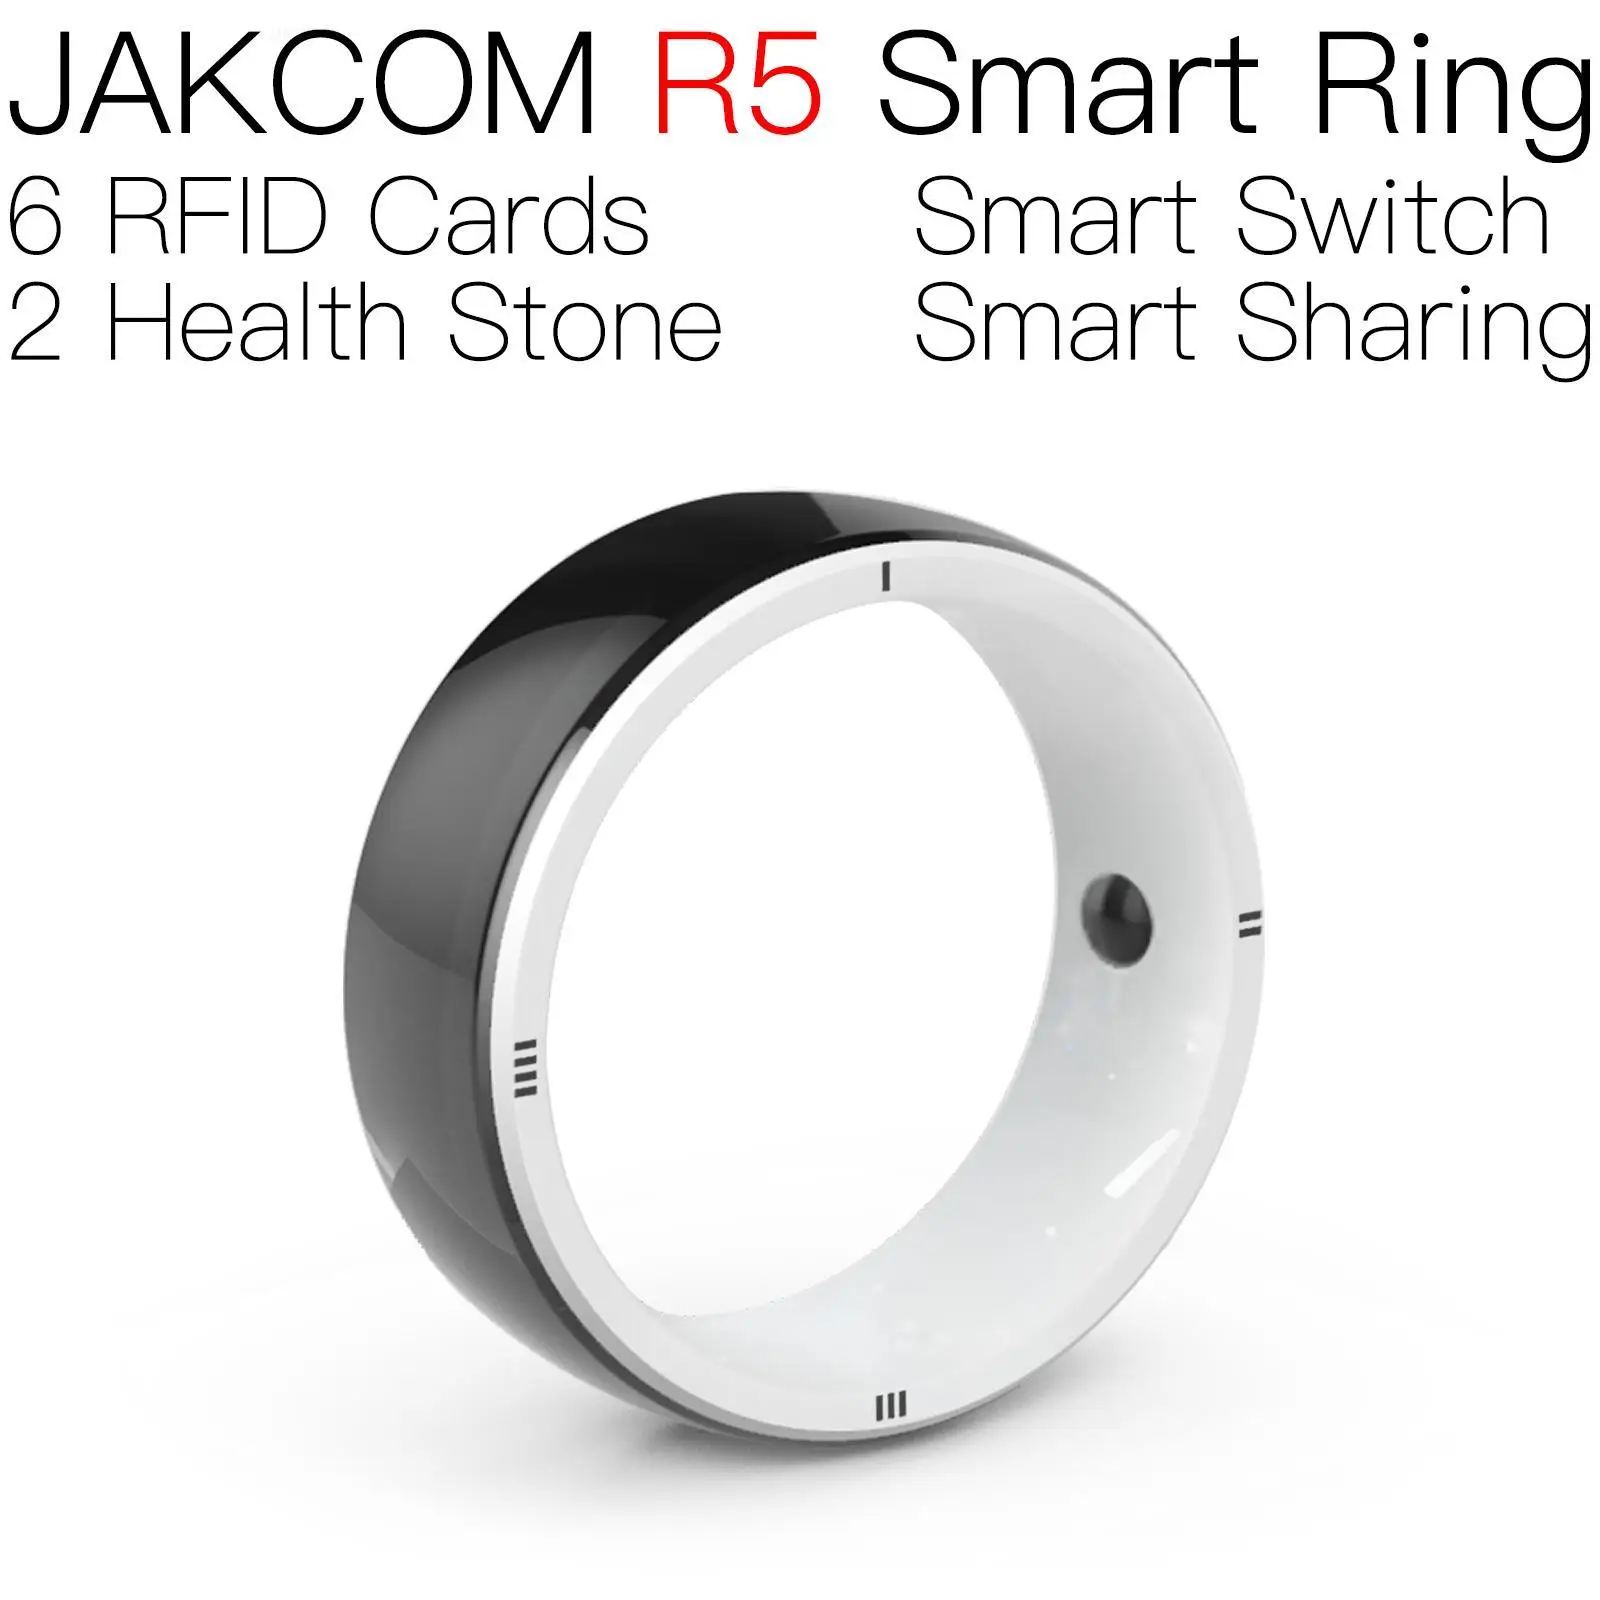 

JAKCOM R5 Smart Ring Match to code smarters tv xtream nfc tag shoes cover rain waterproof keylessgo key repair